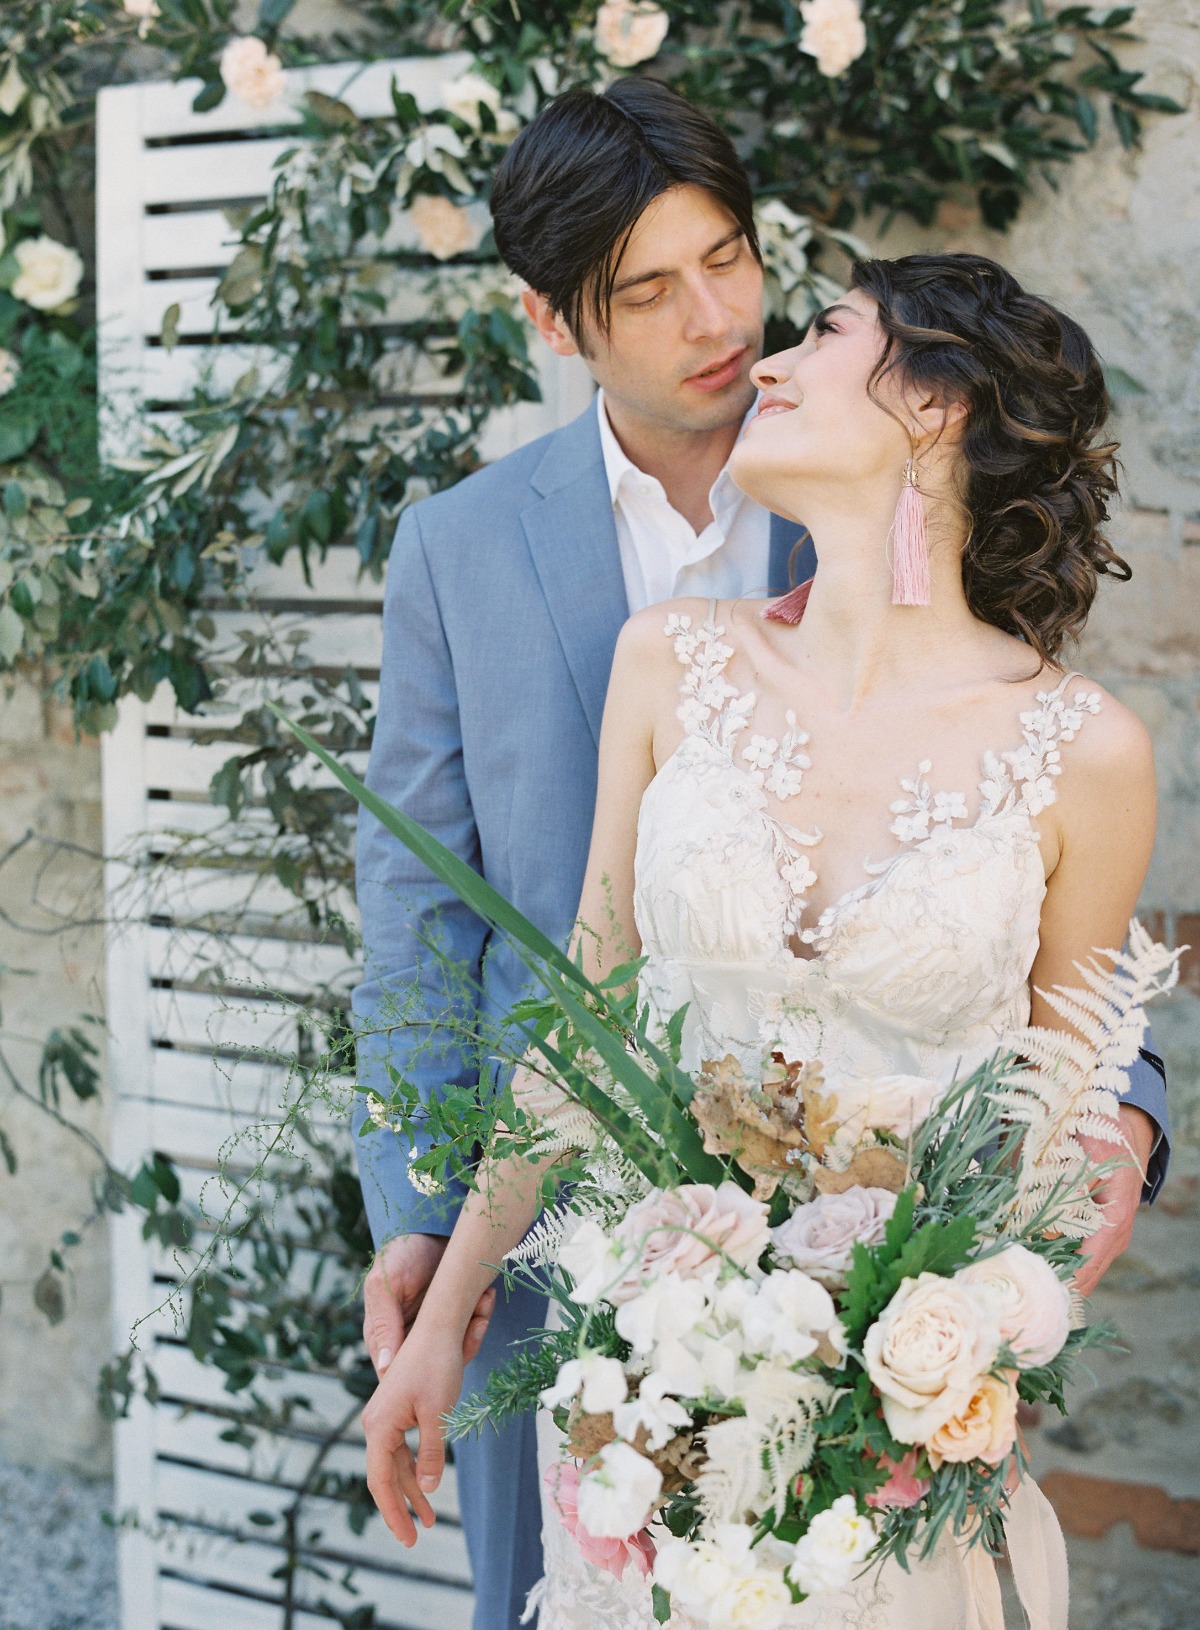 Dreamy, romantic wedding ceremony with wood paneled backdrop